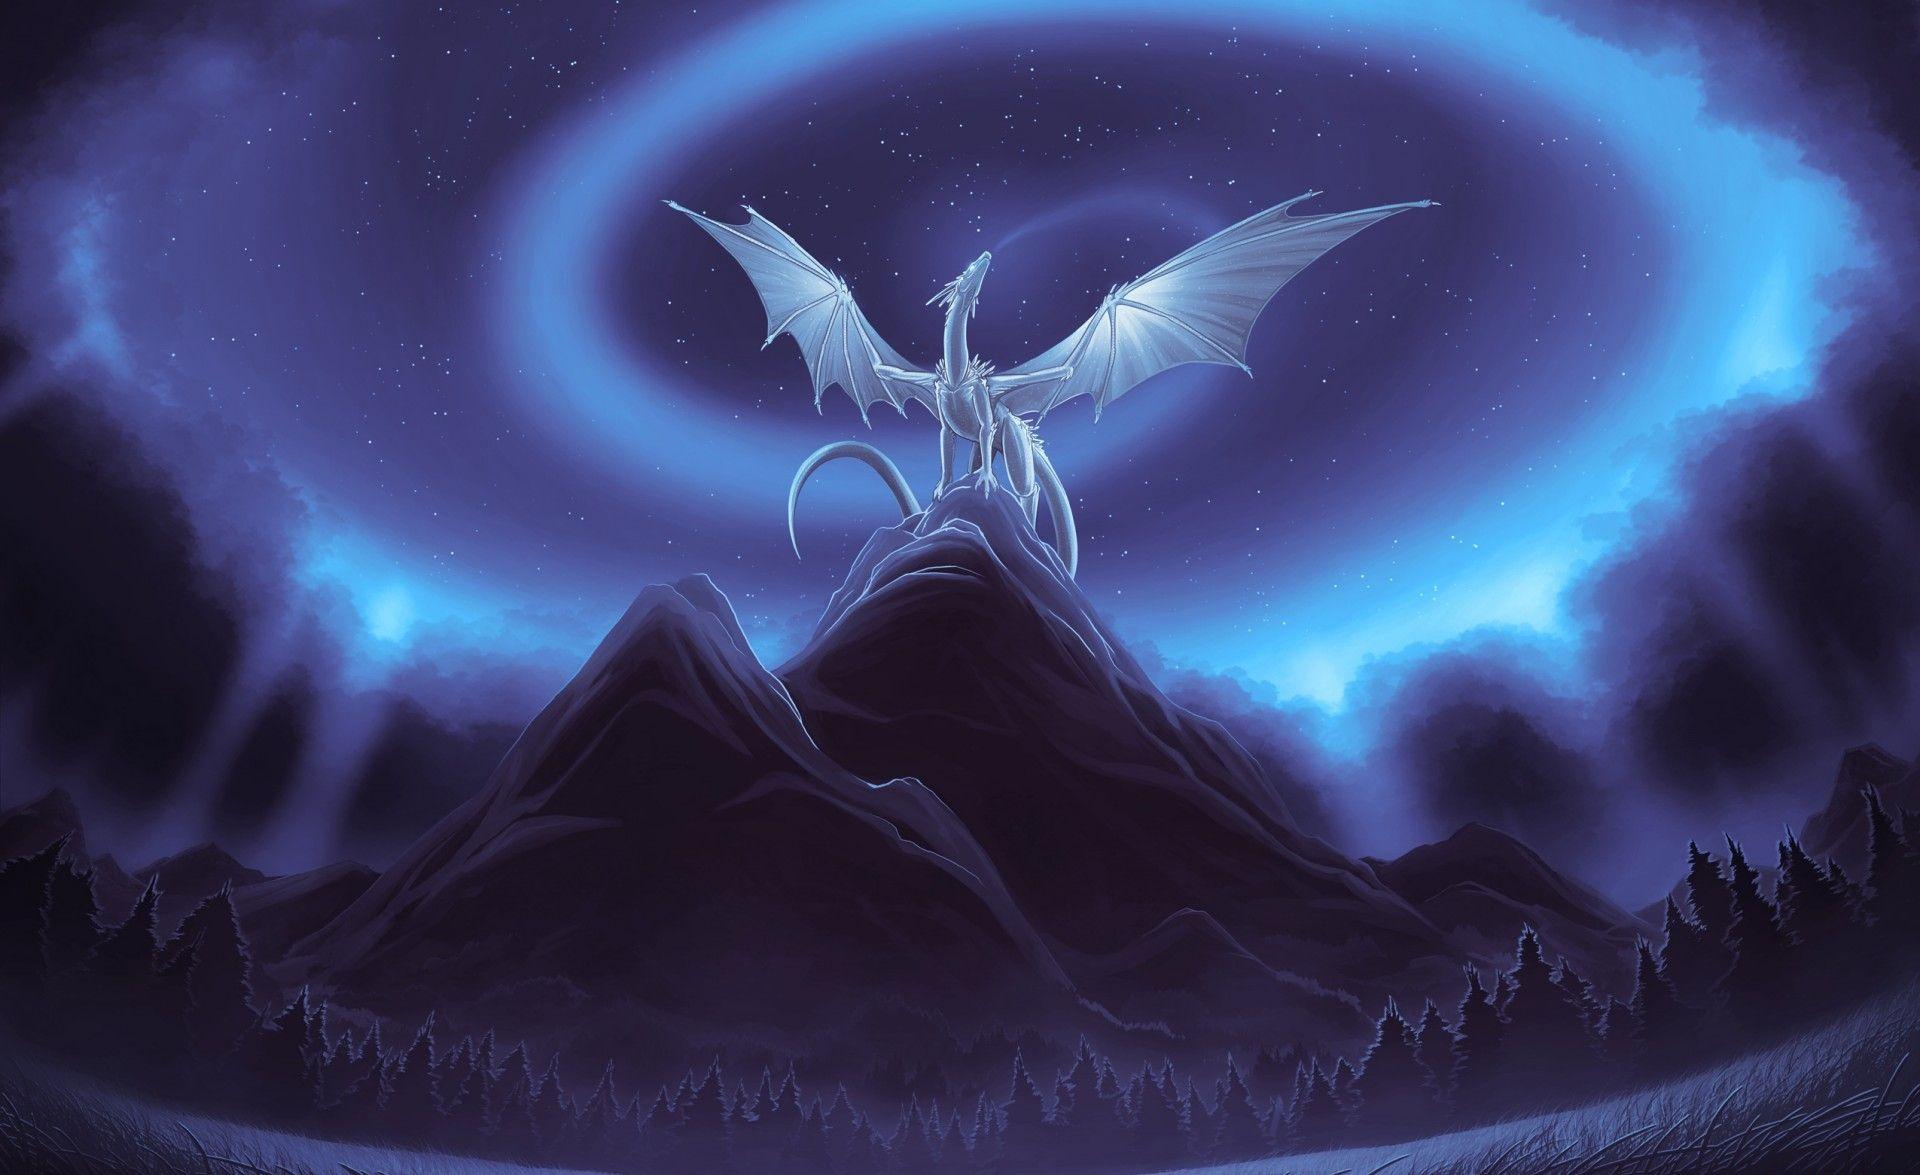 Wallpaper ID 4589  dragon claws fangs art purple 4k free download